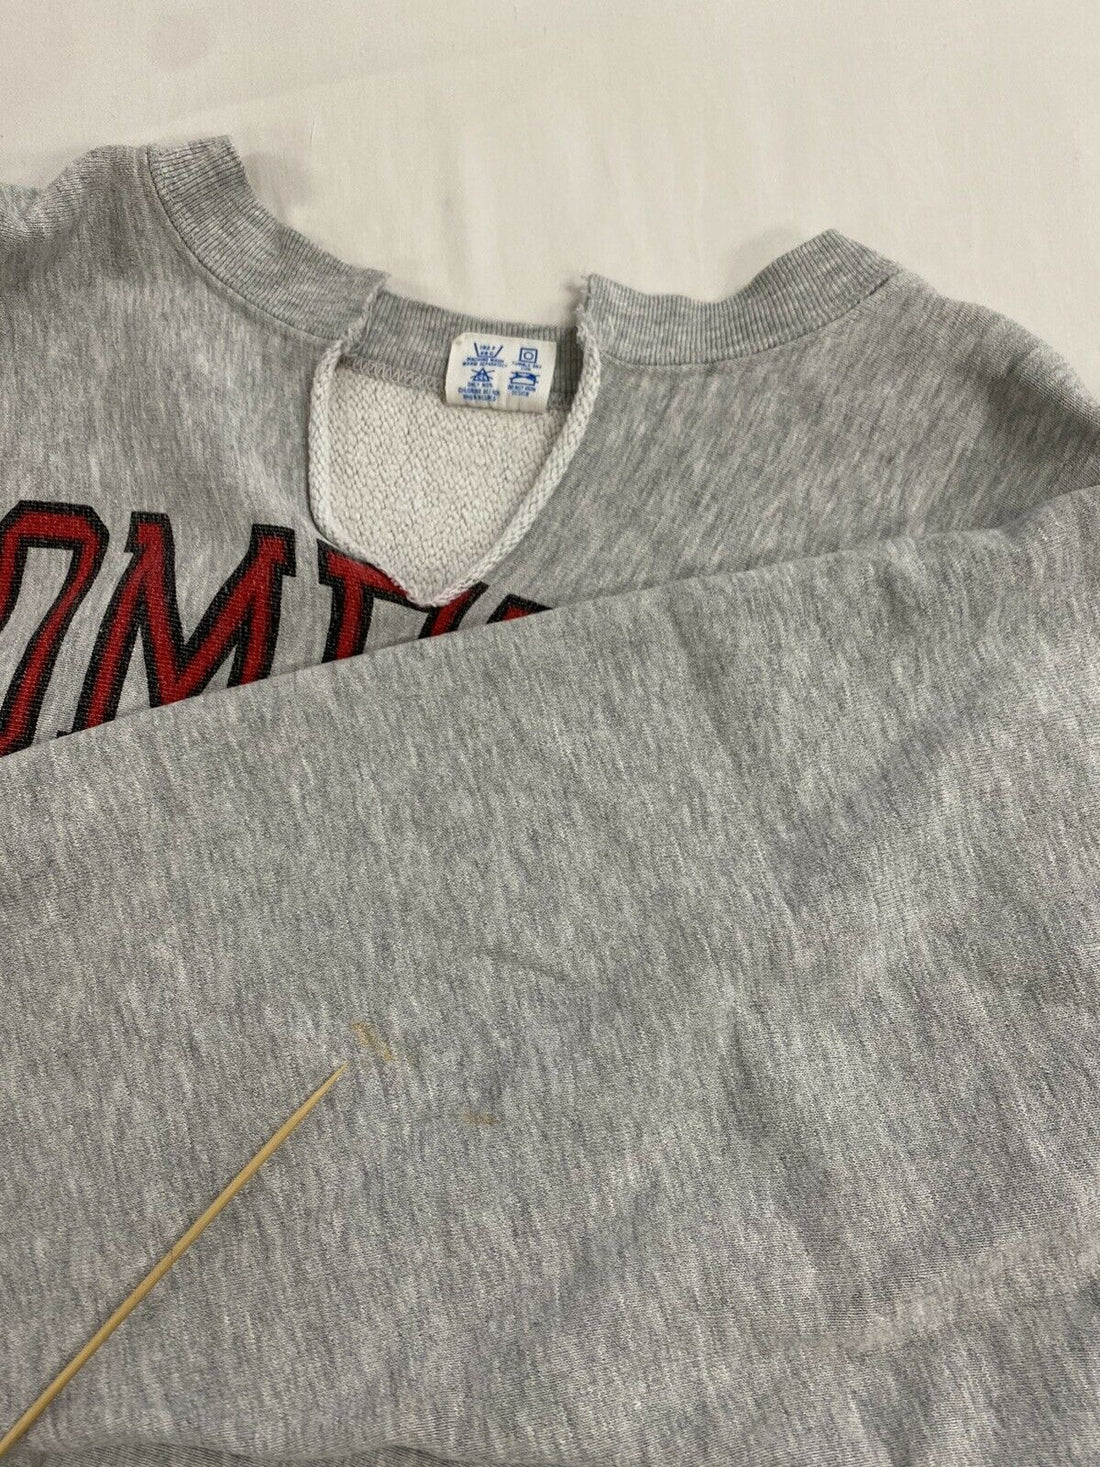 Vintage Pomfret Champion Reverse Weave Sweatshirt Crewneck Large 80s Distressed